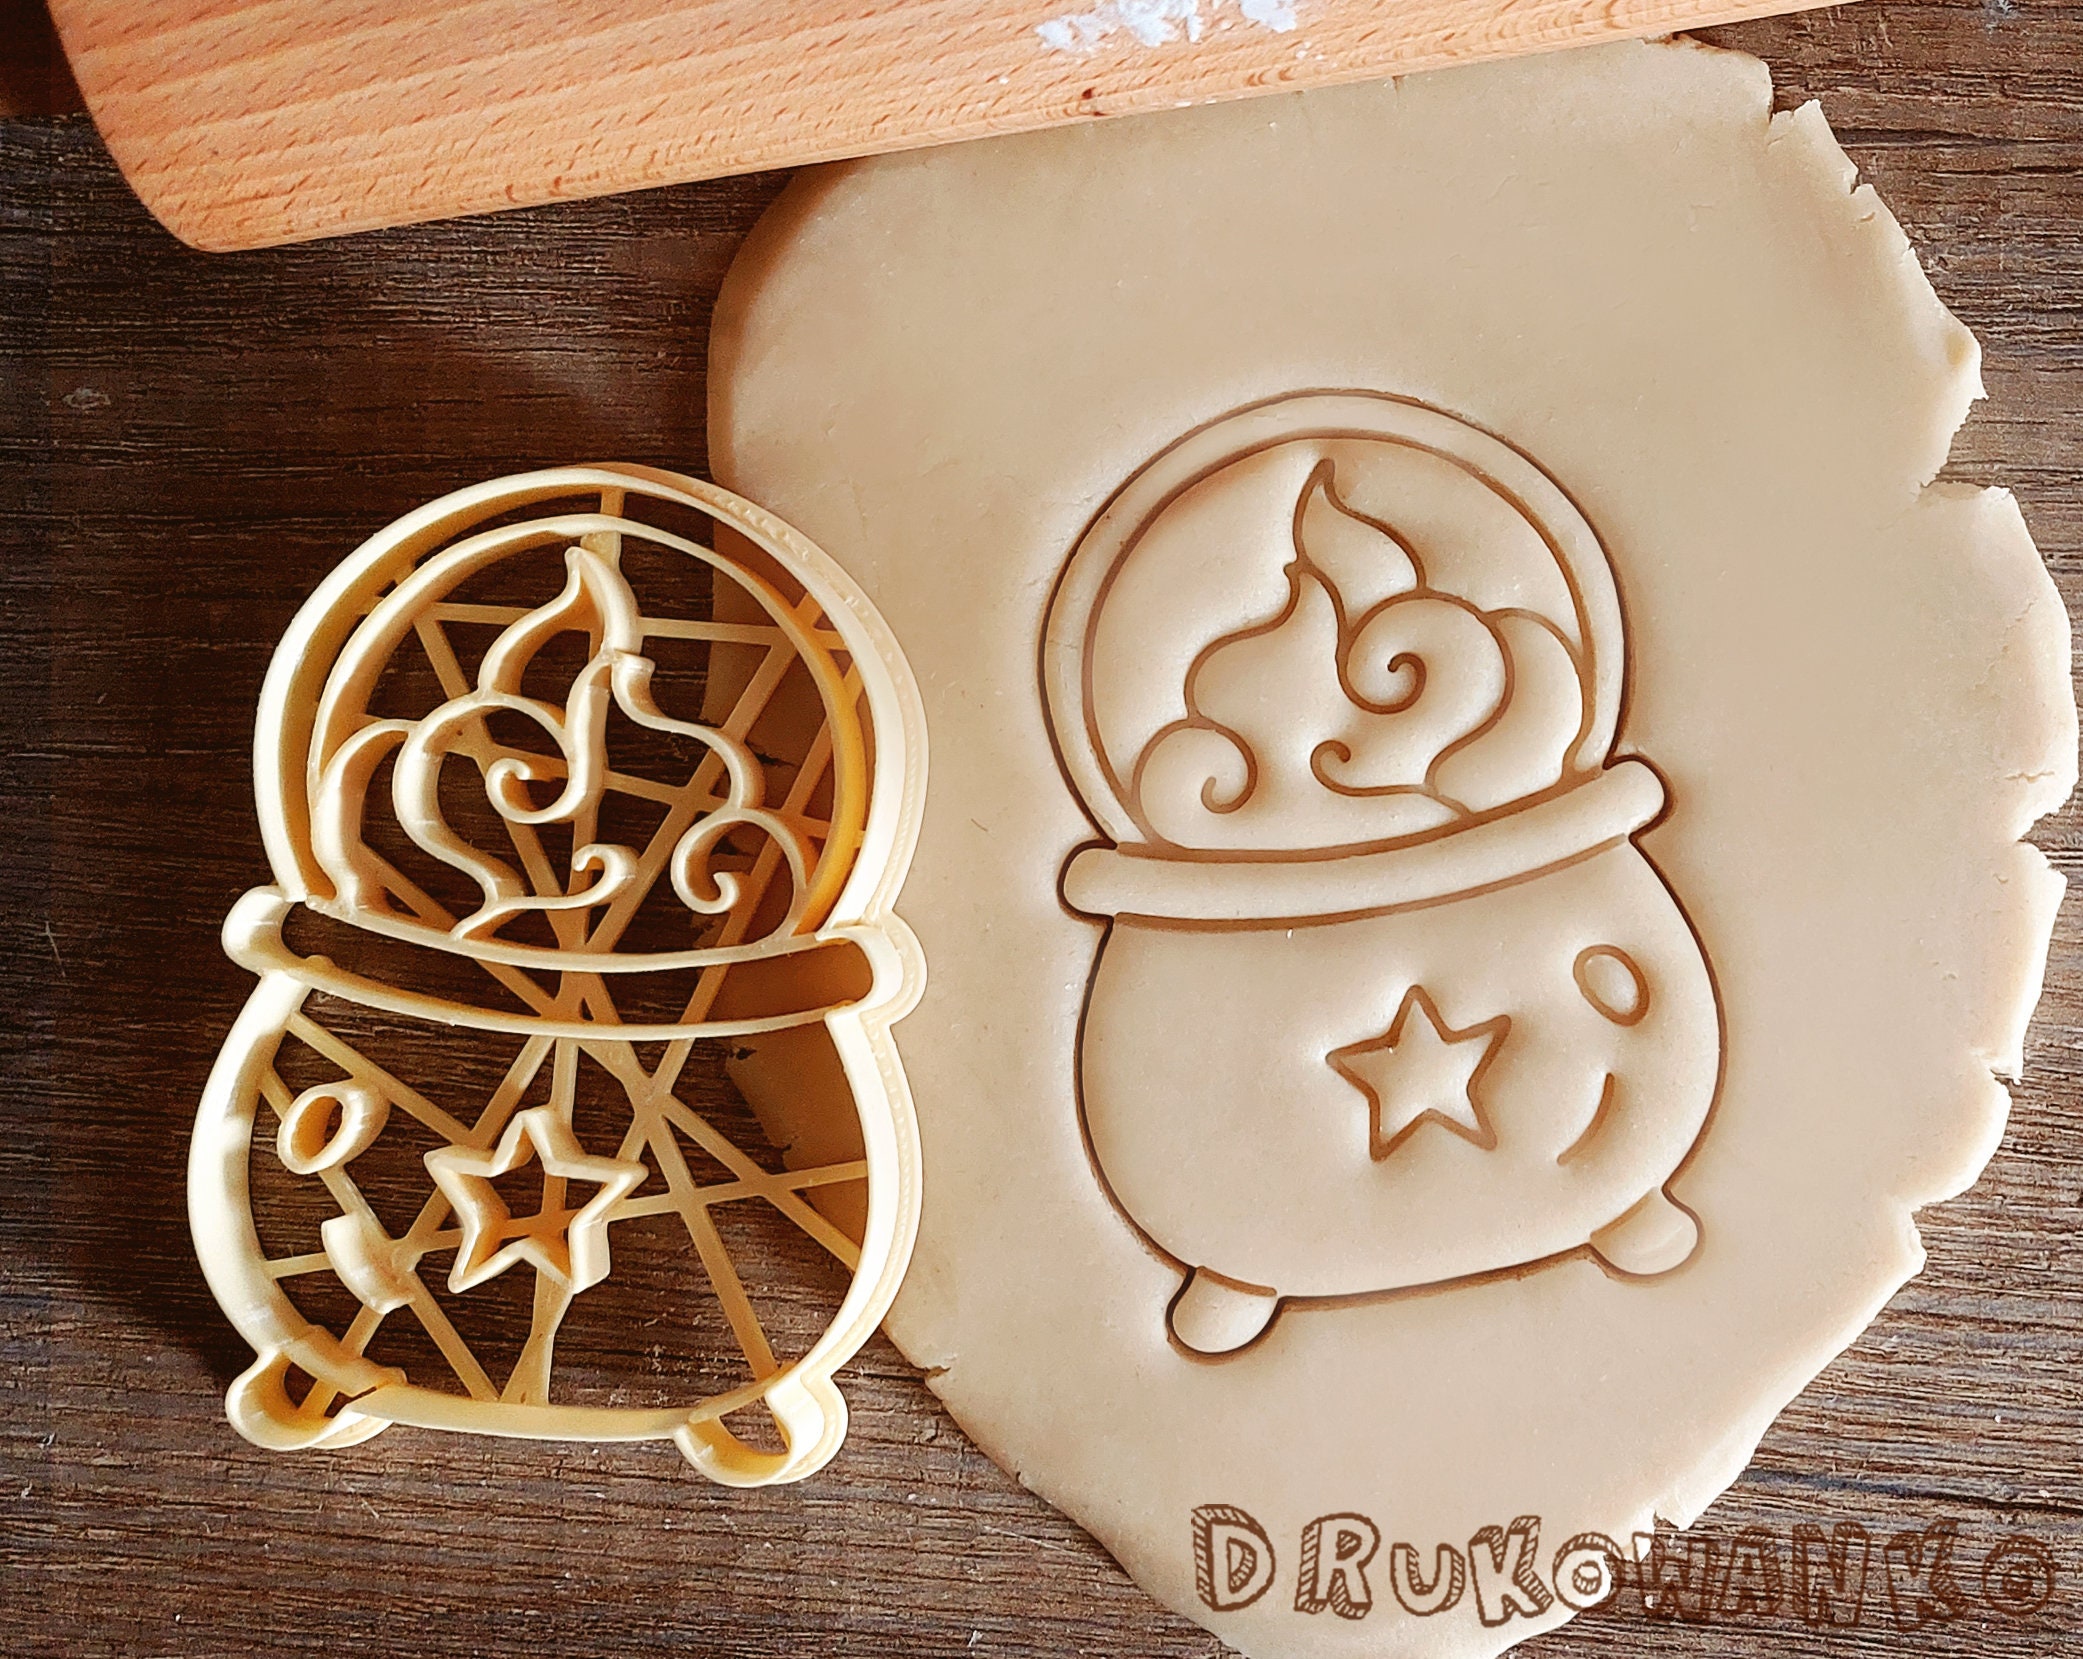 Minimalistic Harry Potter Cookie Cutter by martellaj